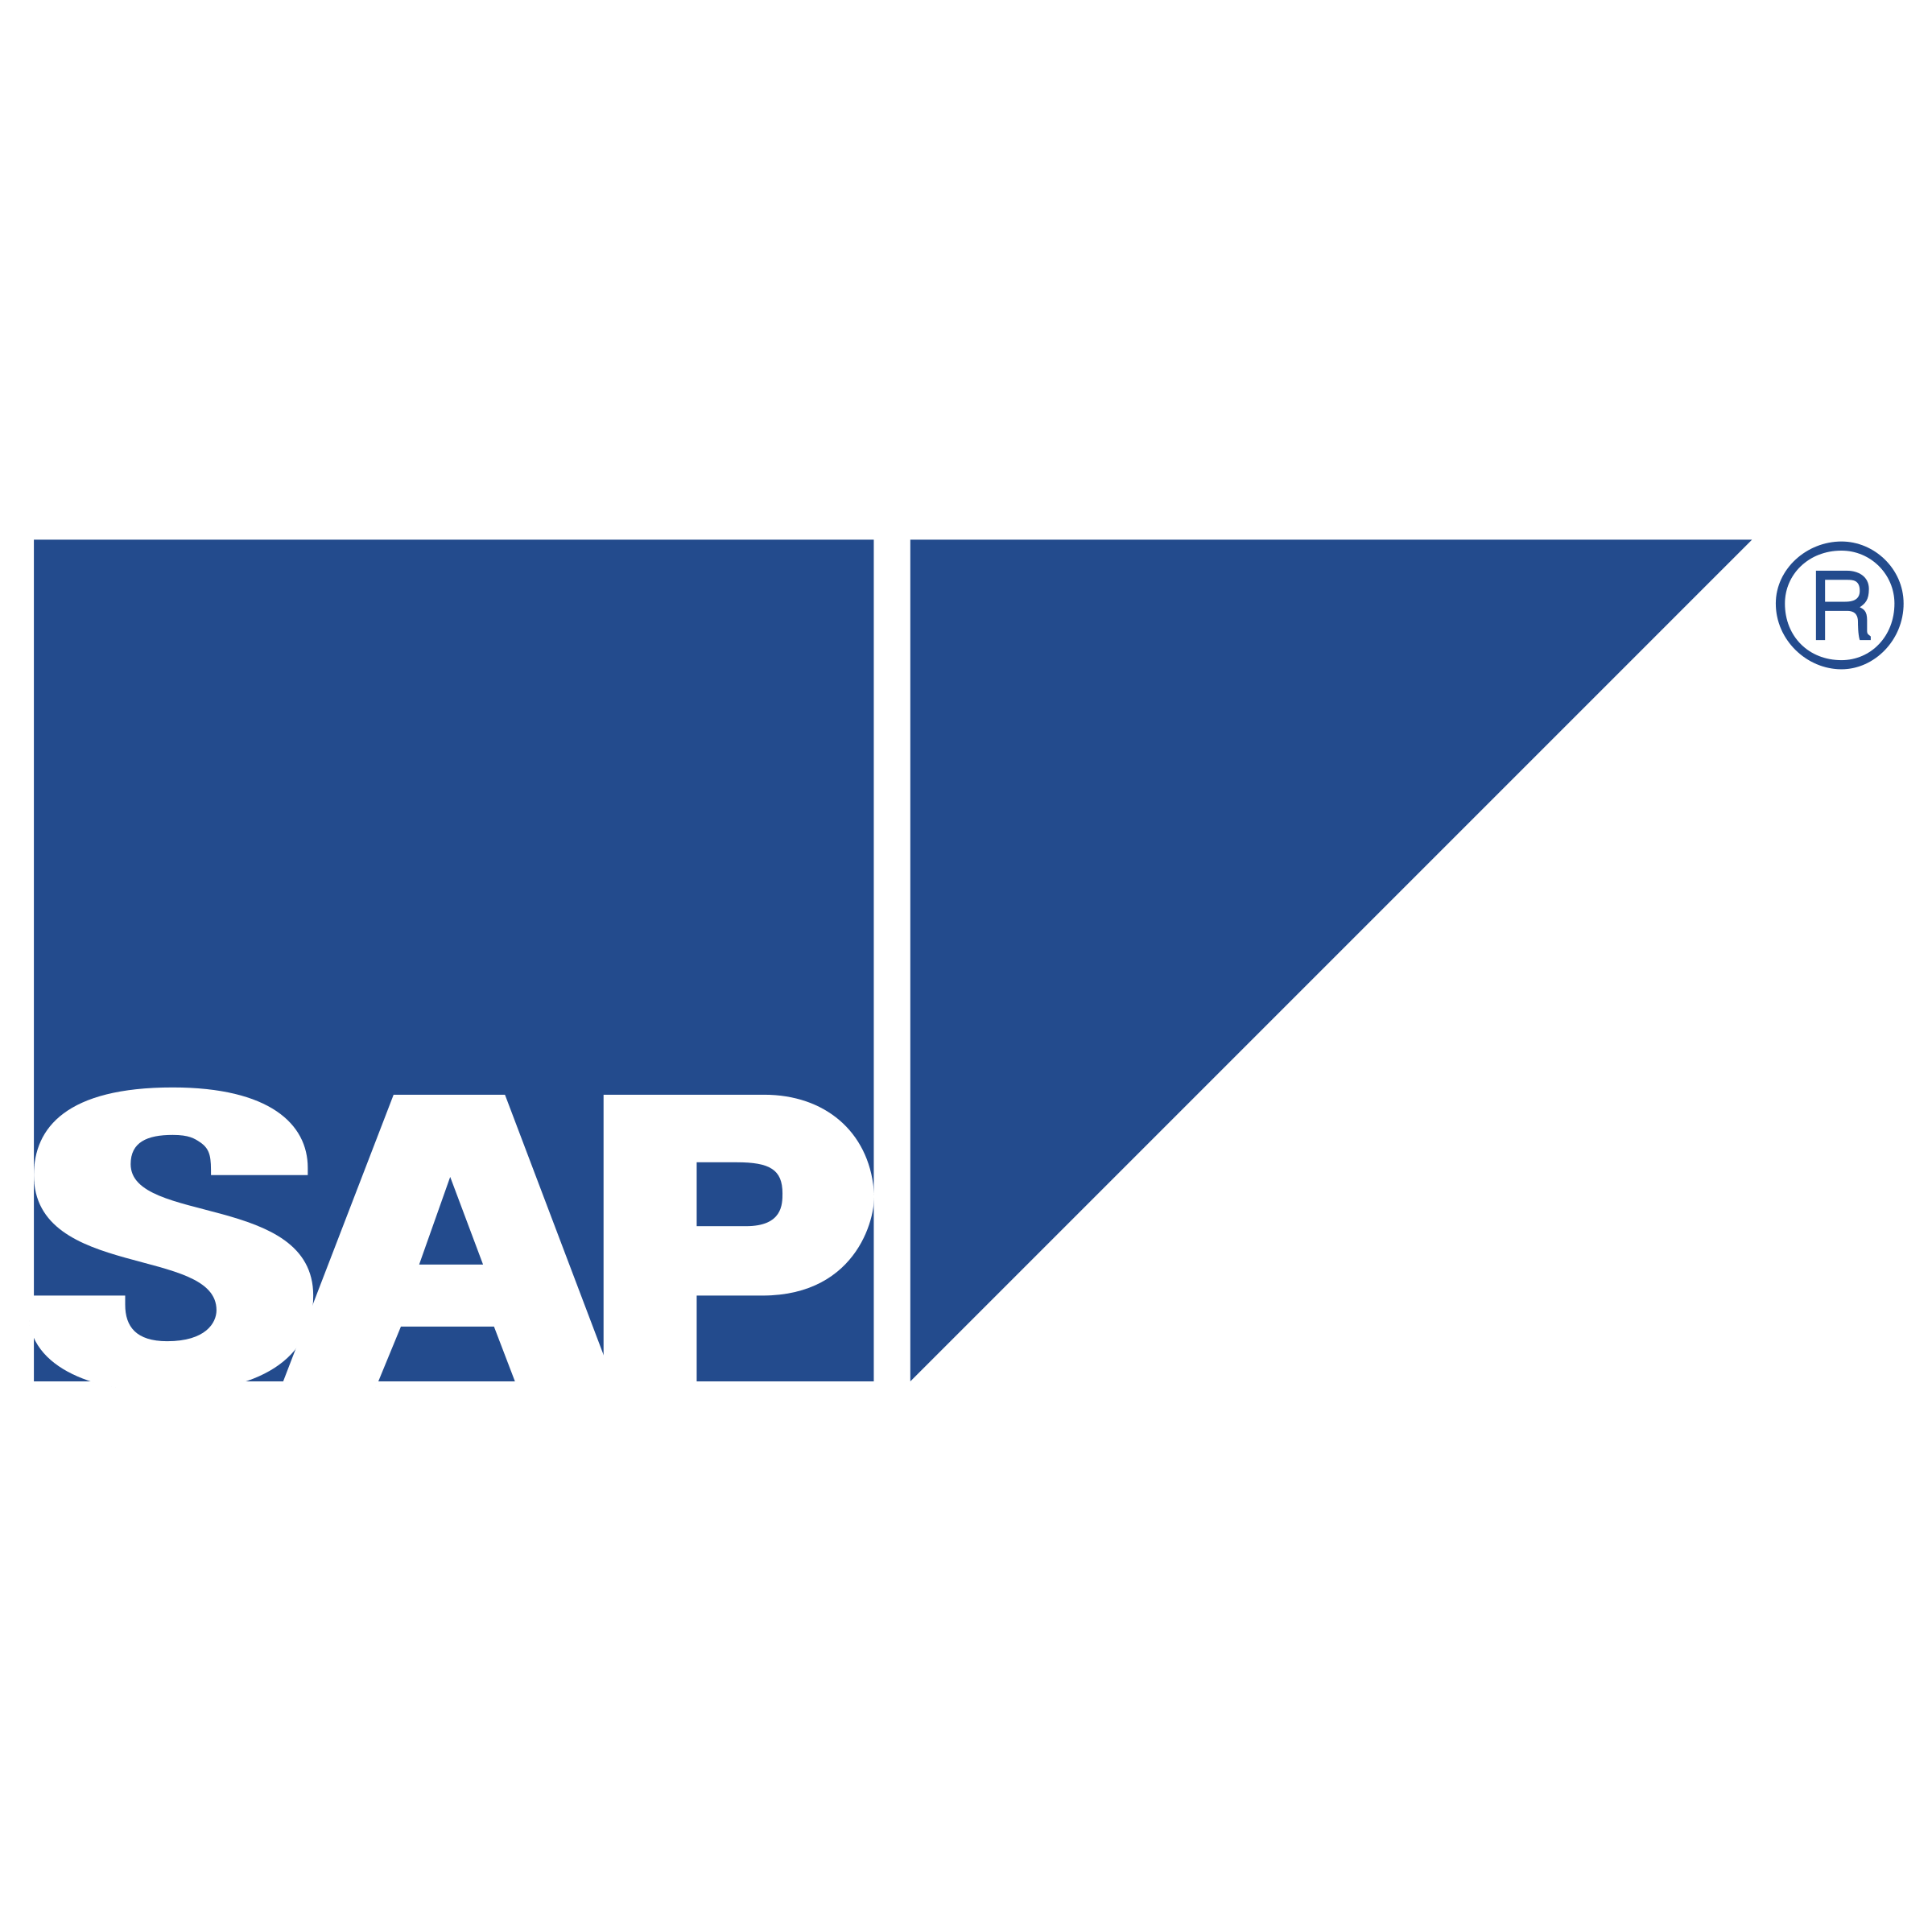 SAP Logo - SAP Logo PNG Transparent & SVG Vector - Freebie Supply